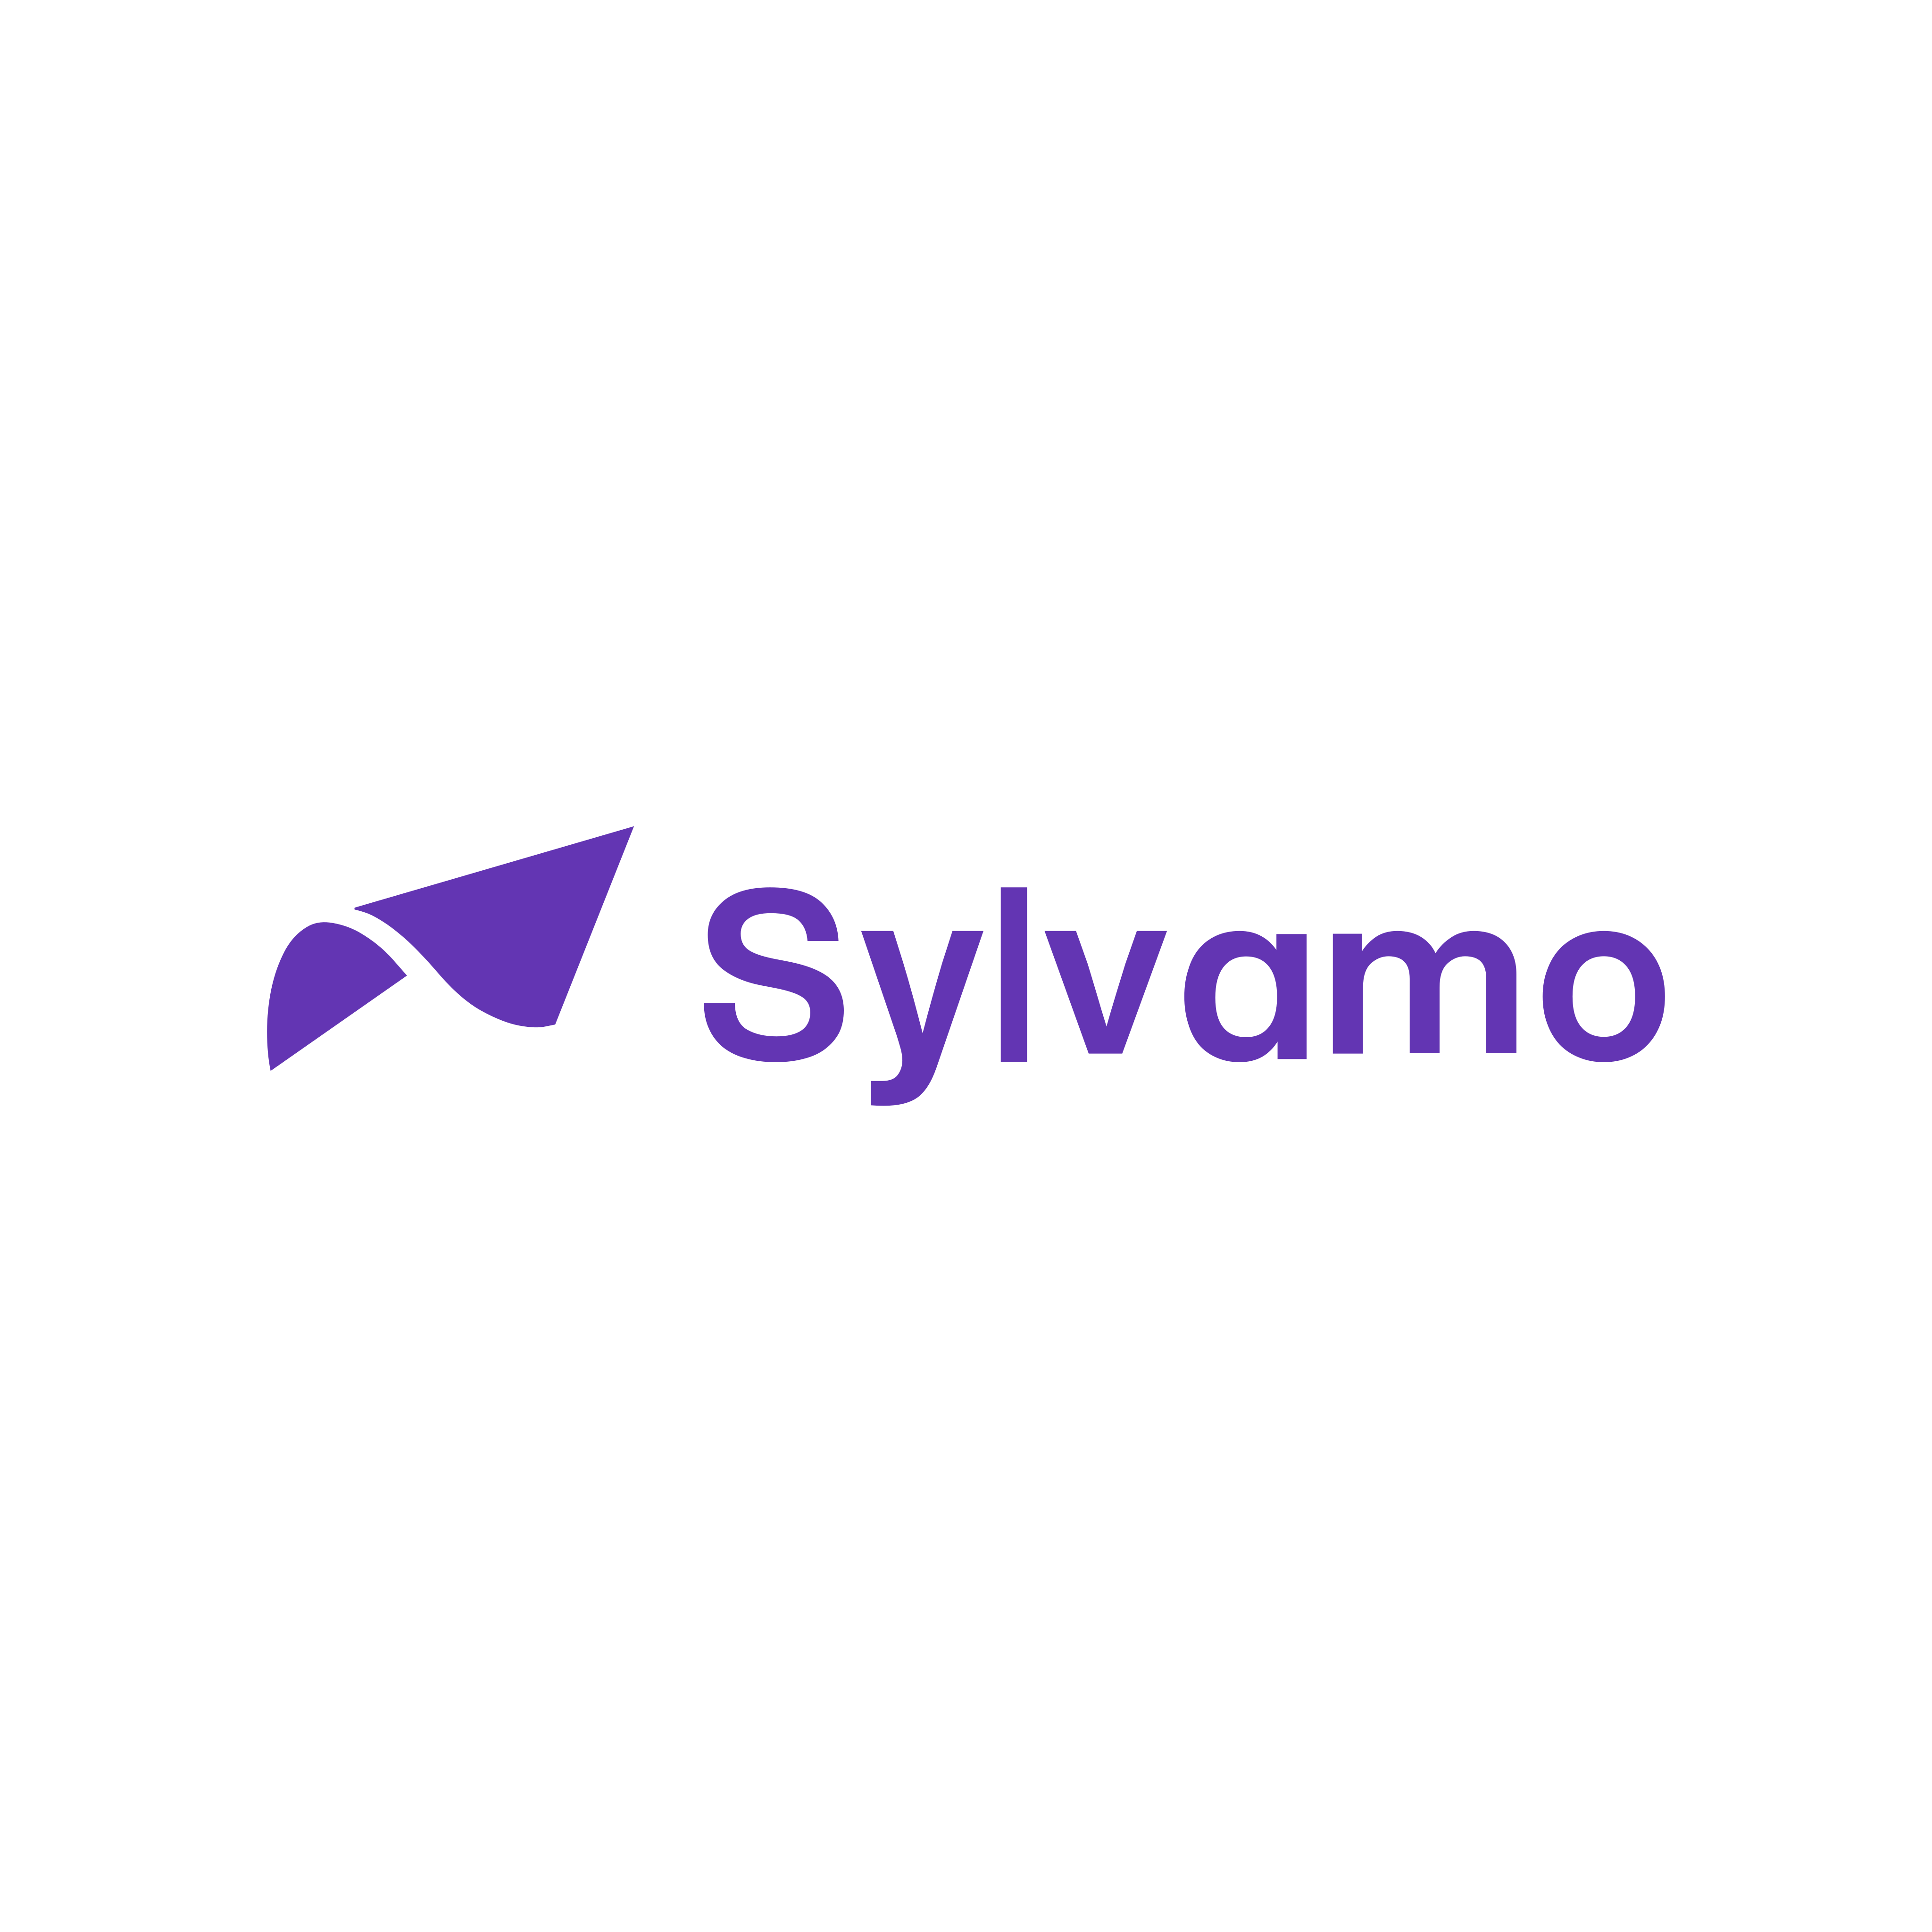 Sylvamo Logo PNG.